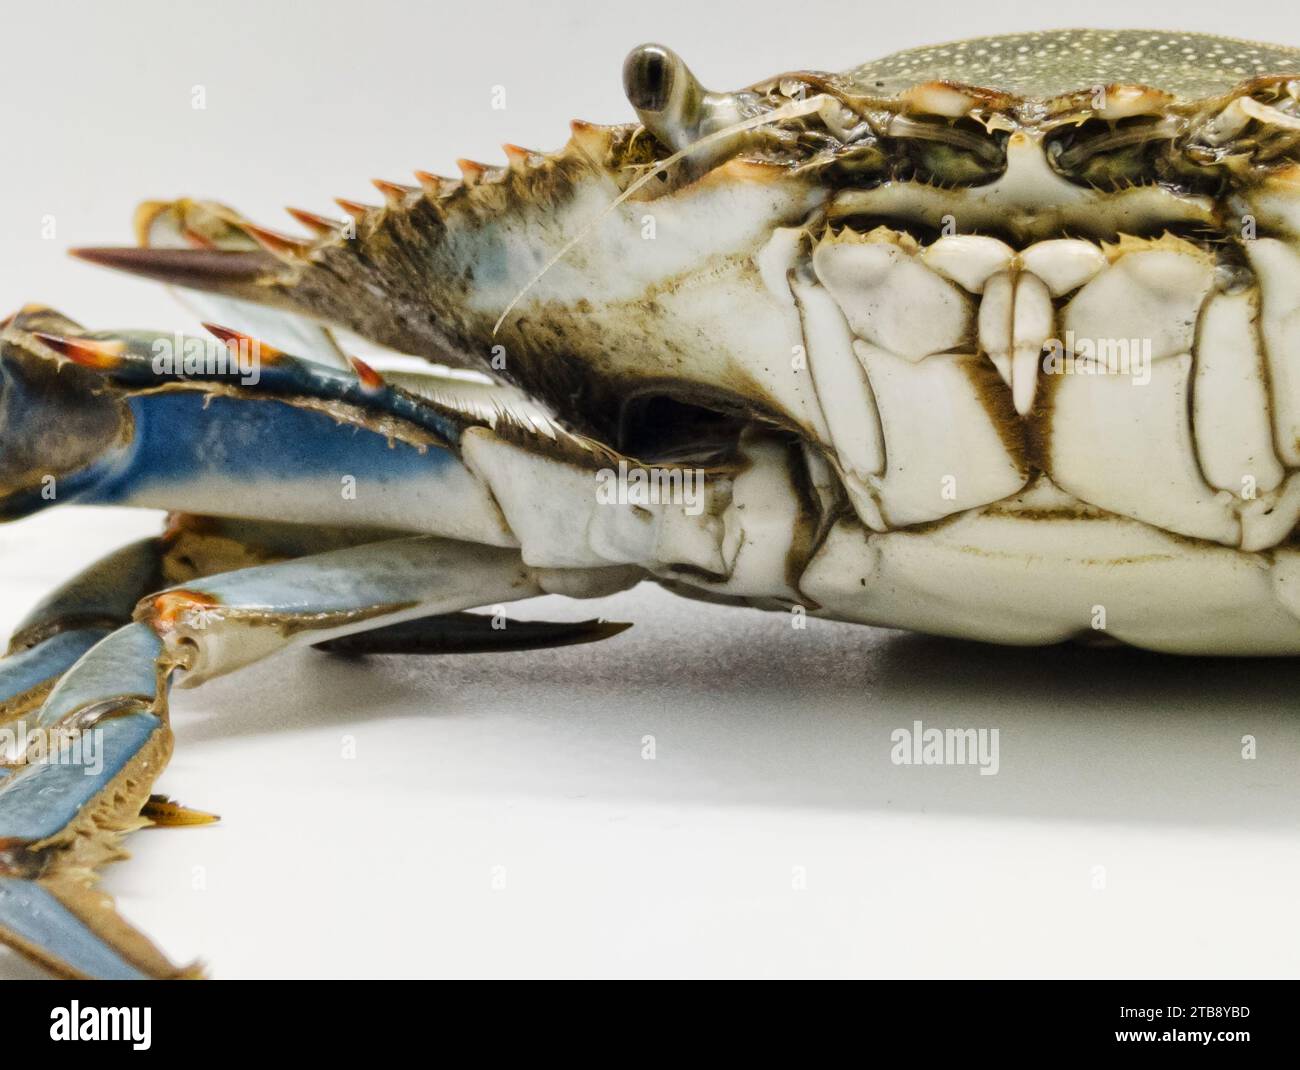 Portrait of a live Blue Crab or Callinectes sapidus Stock Photo